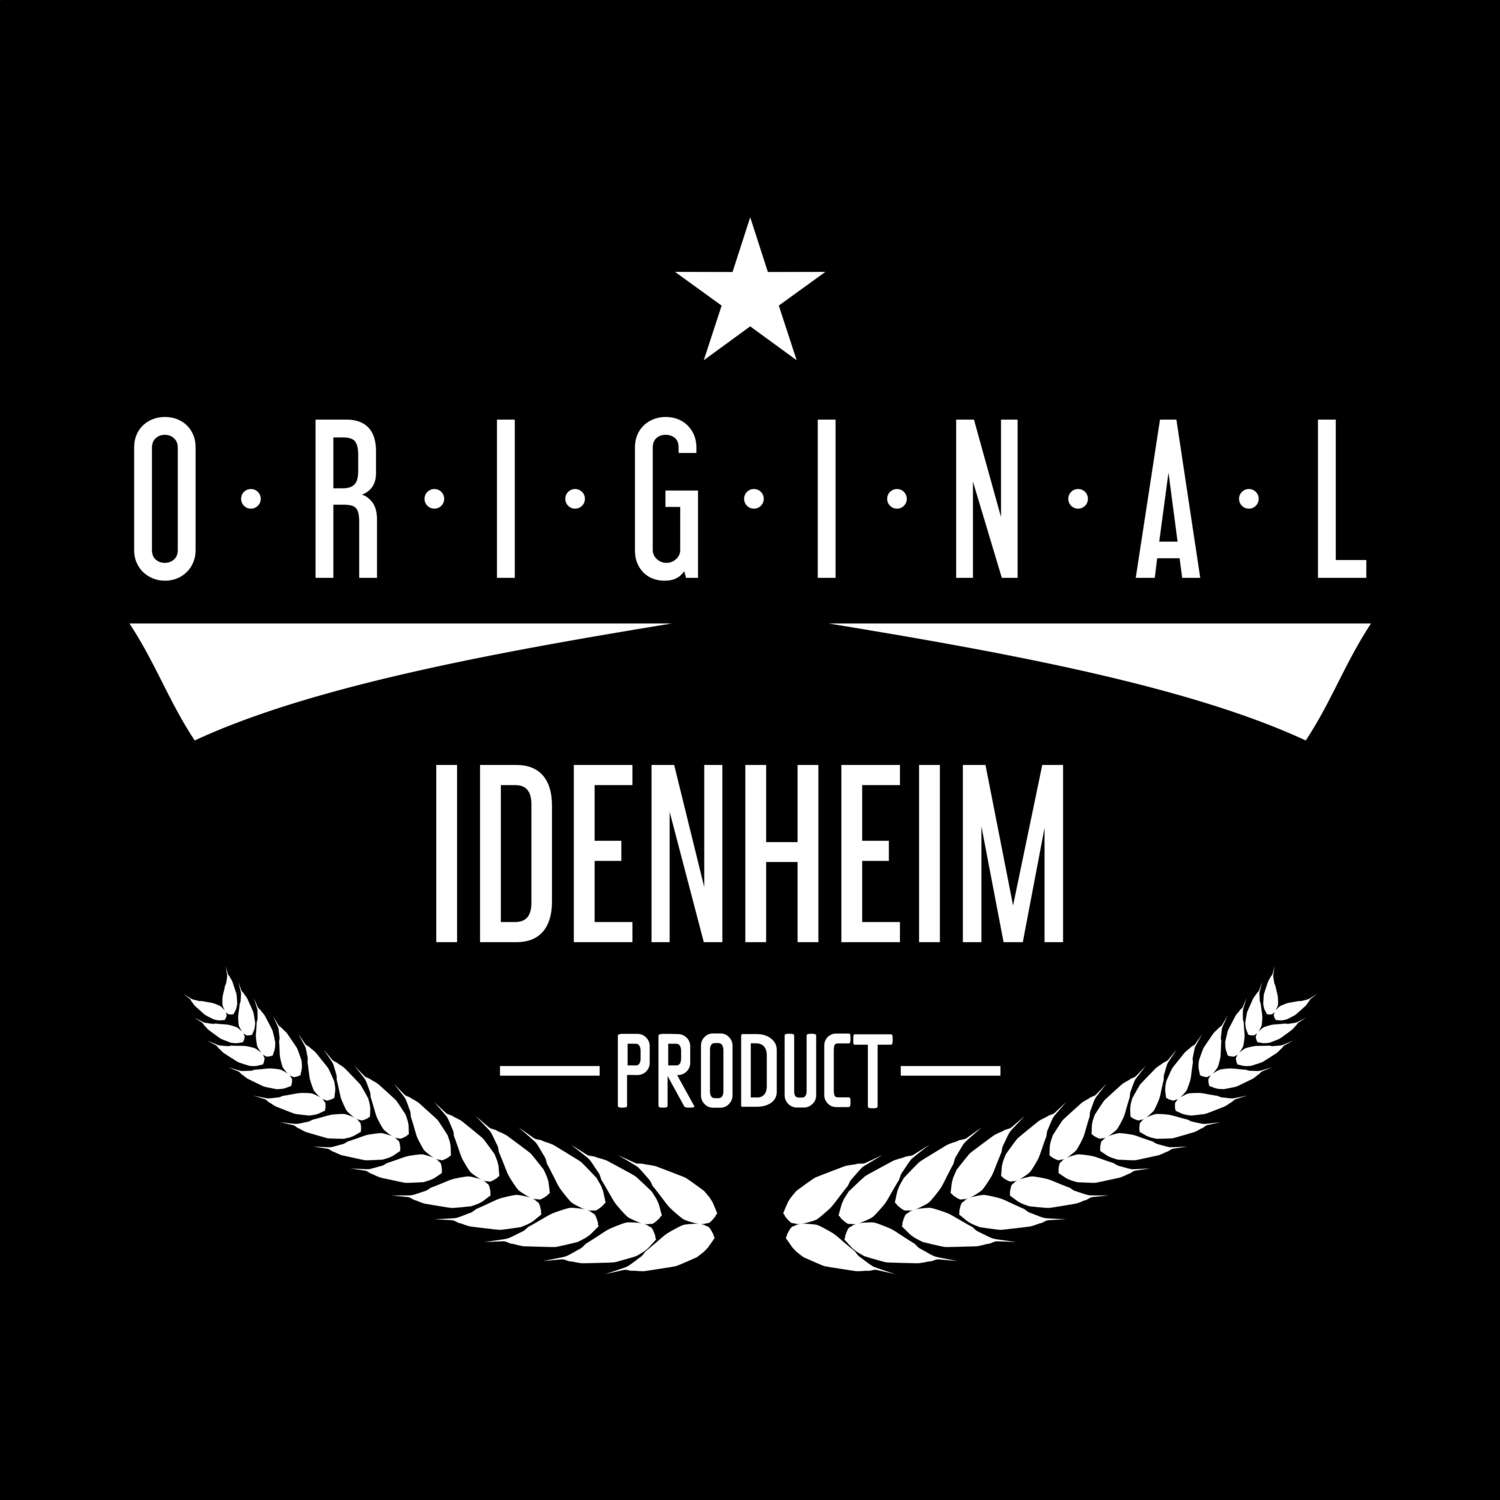 Idenheim T-Shirt »Original Product«